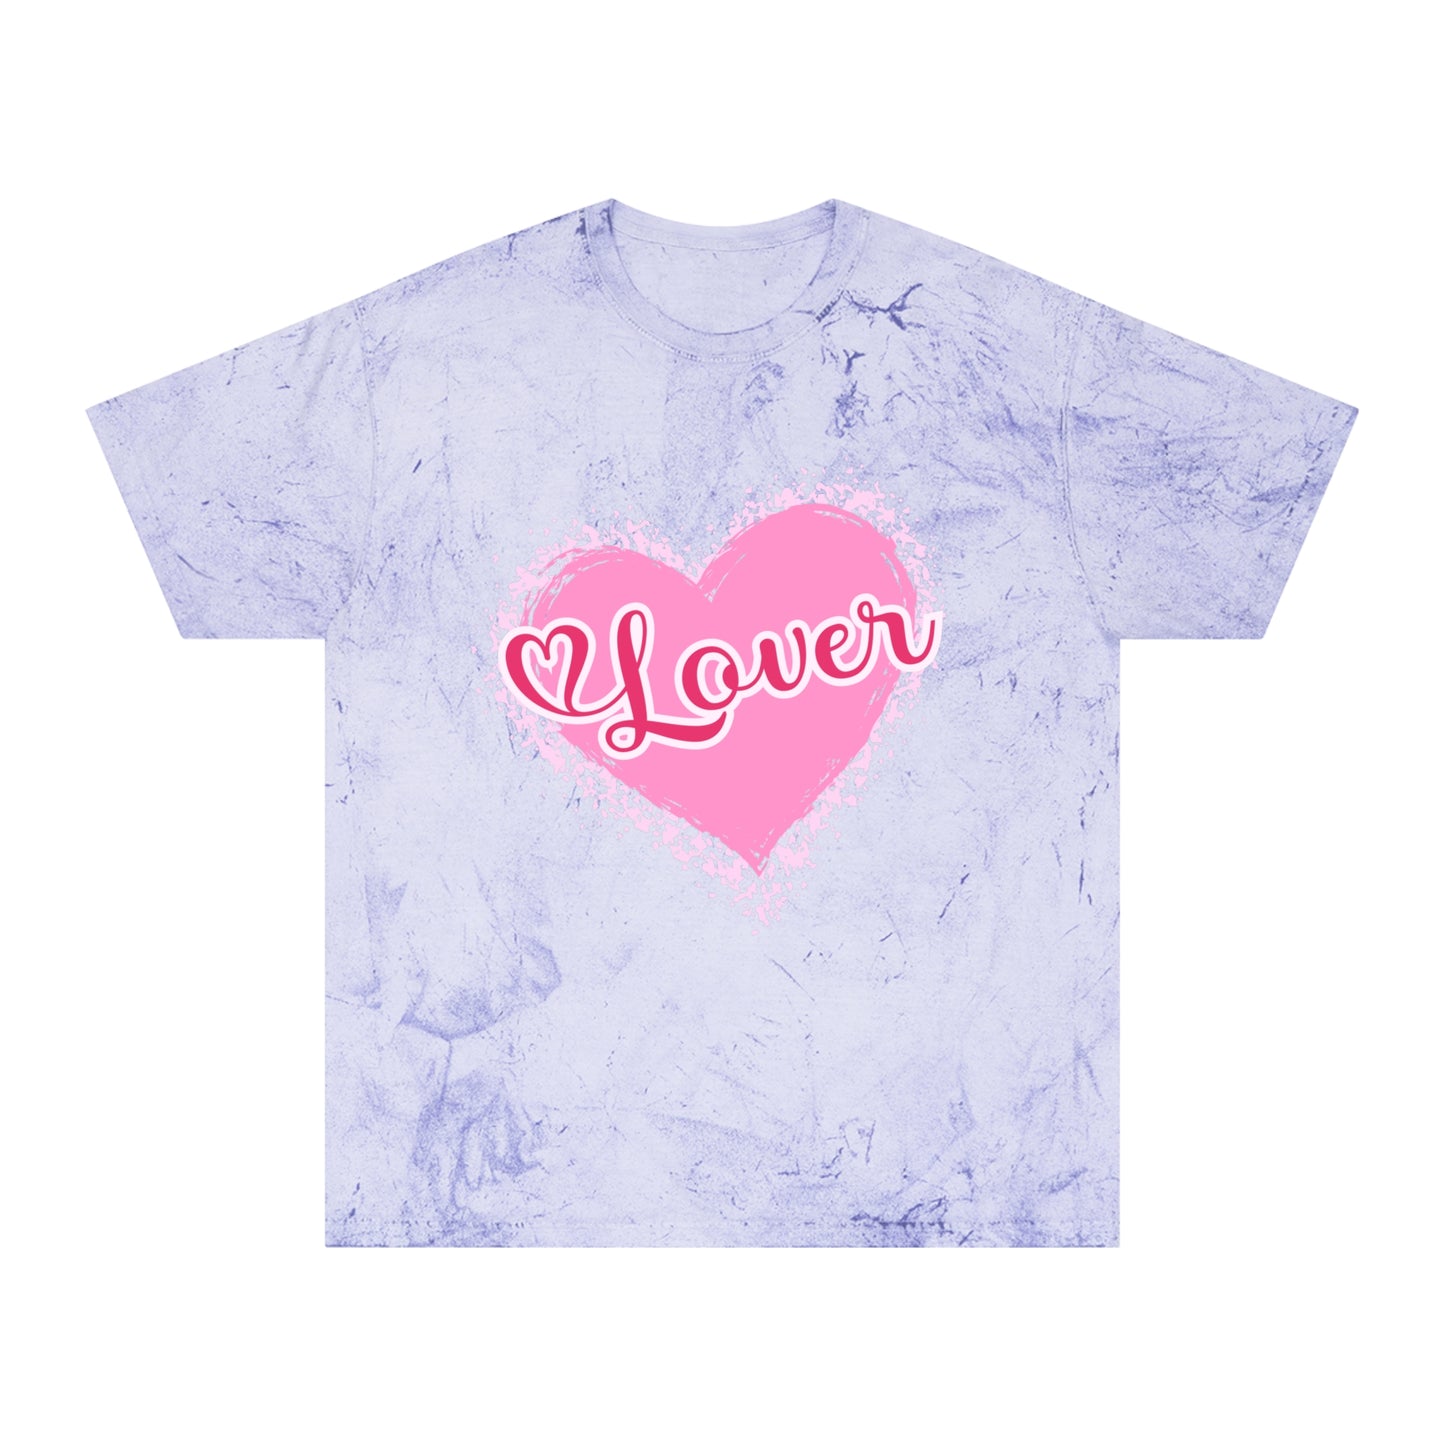 Lover - Tie Dye T-Shirt